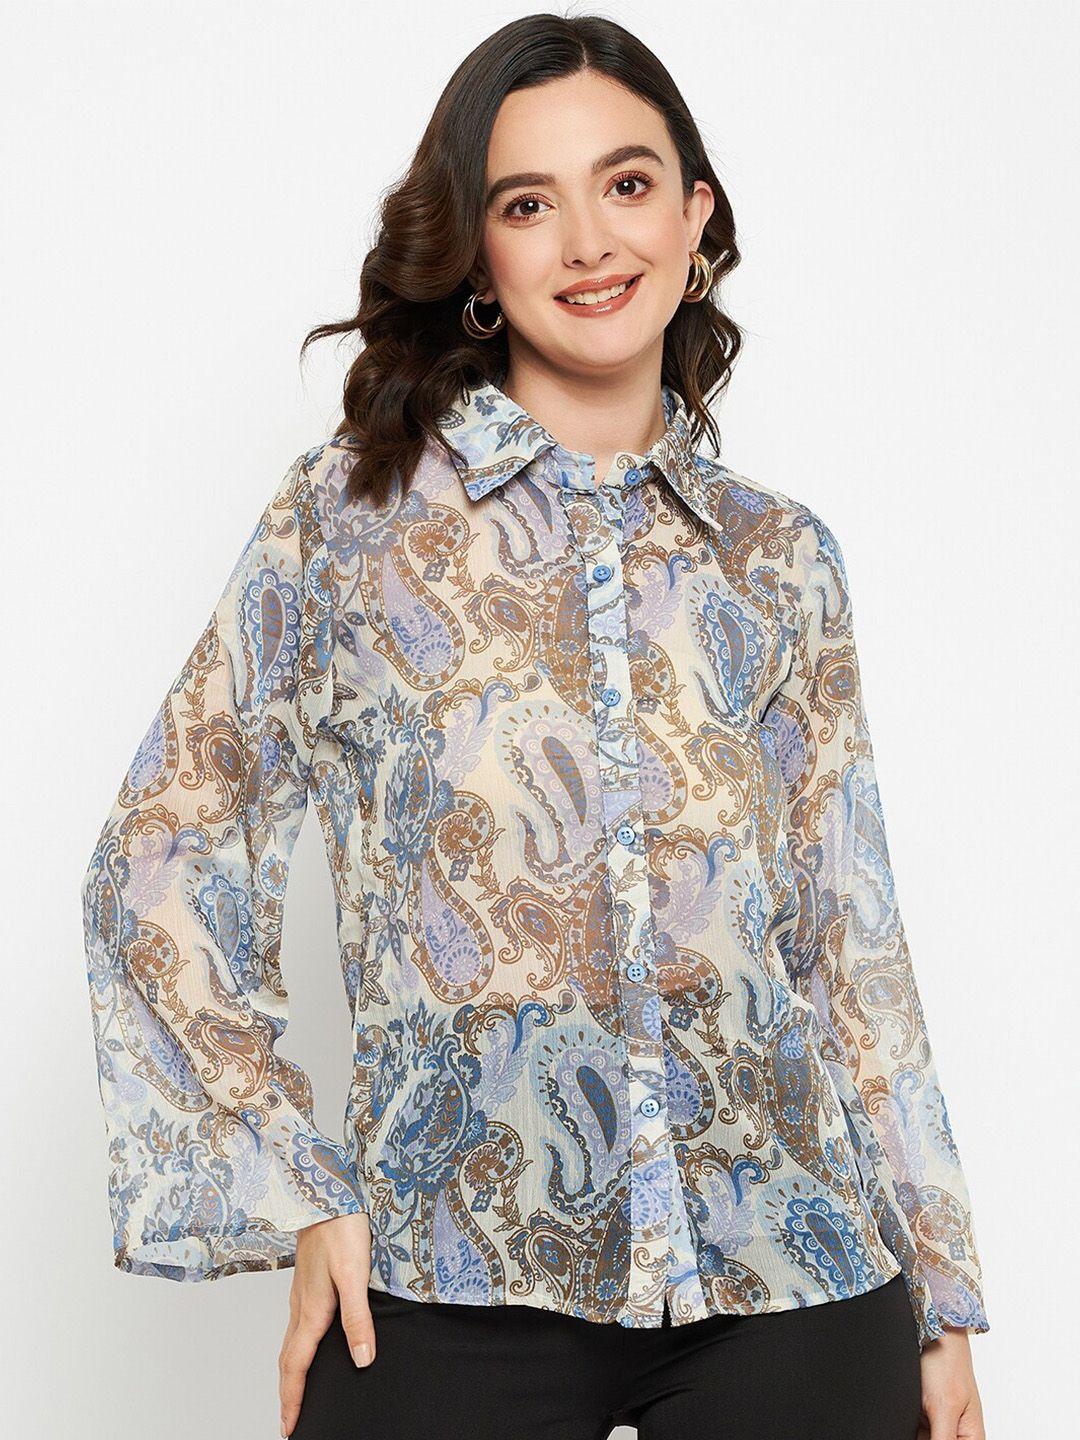 fashfun ethnic motifs paisley printed shirt collar flared sleeve shirt style top